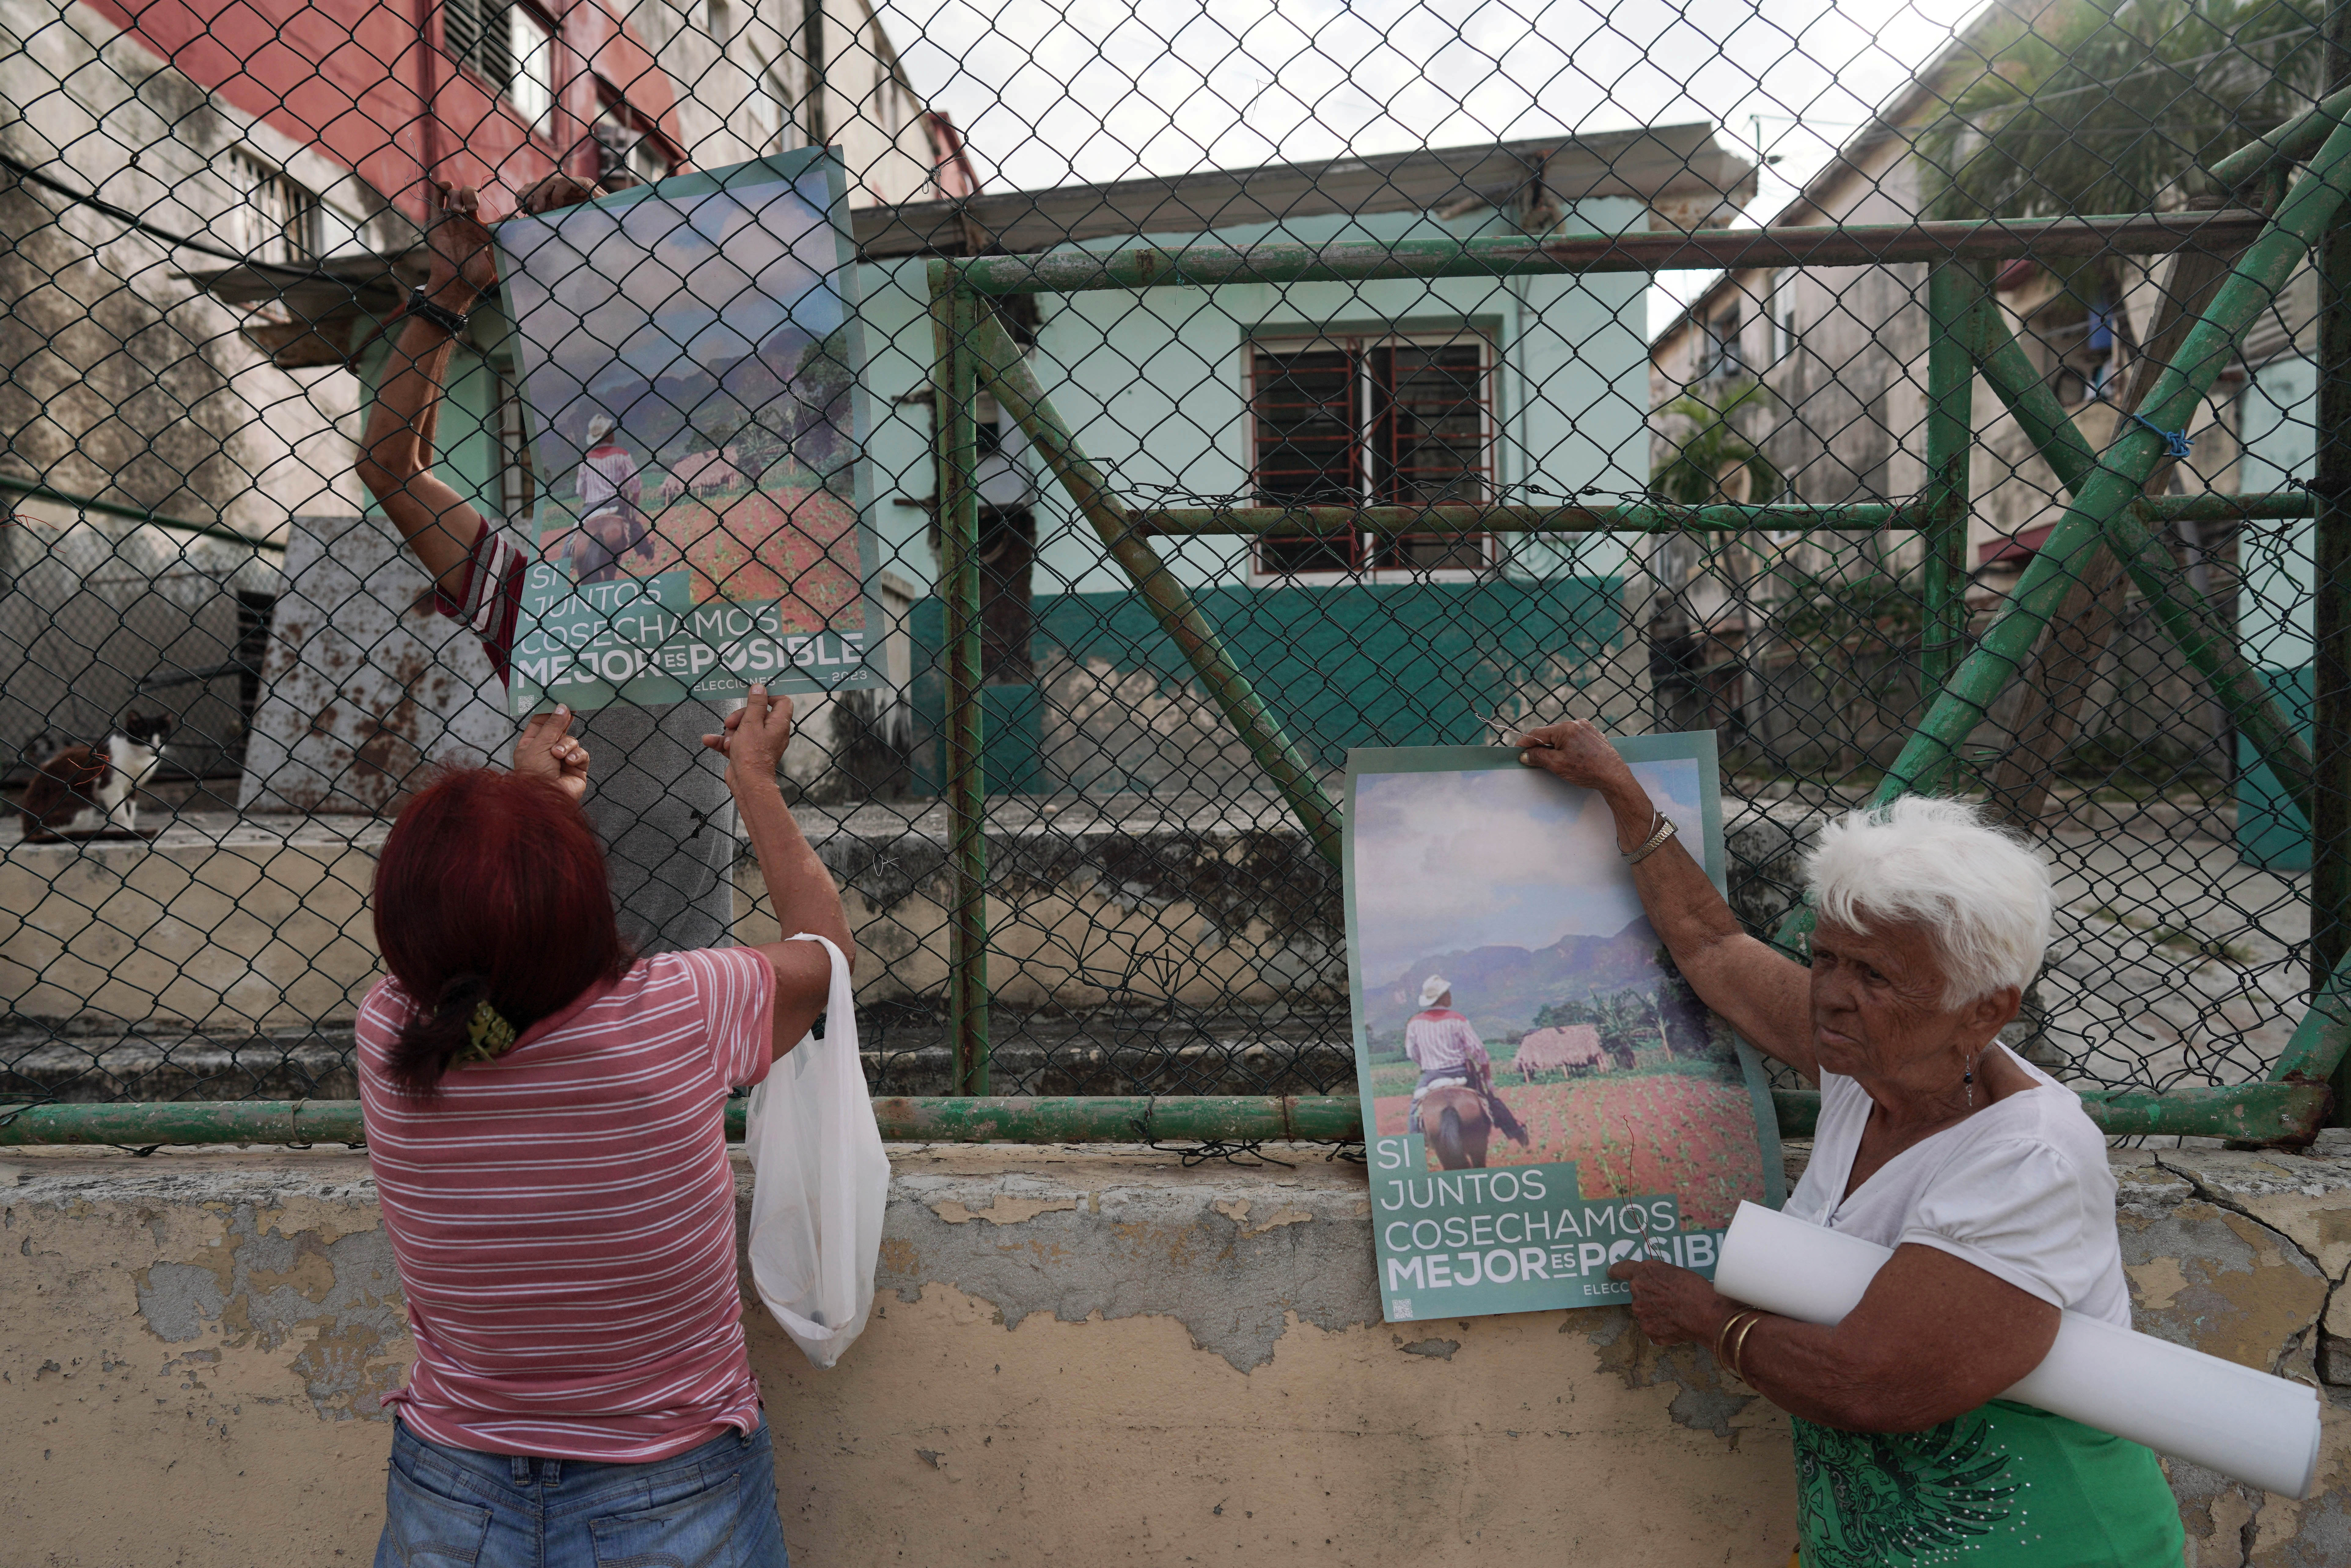 Legislative elections to take place in Cuba